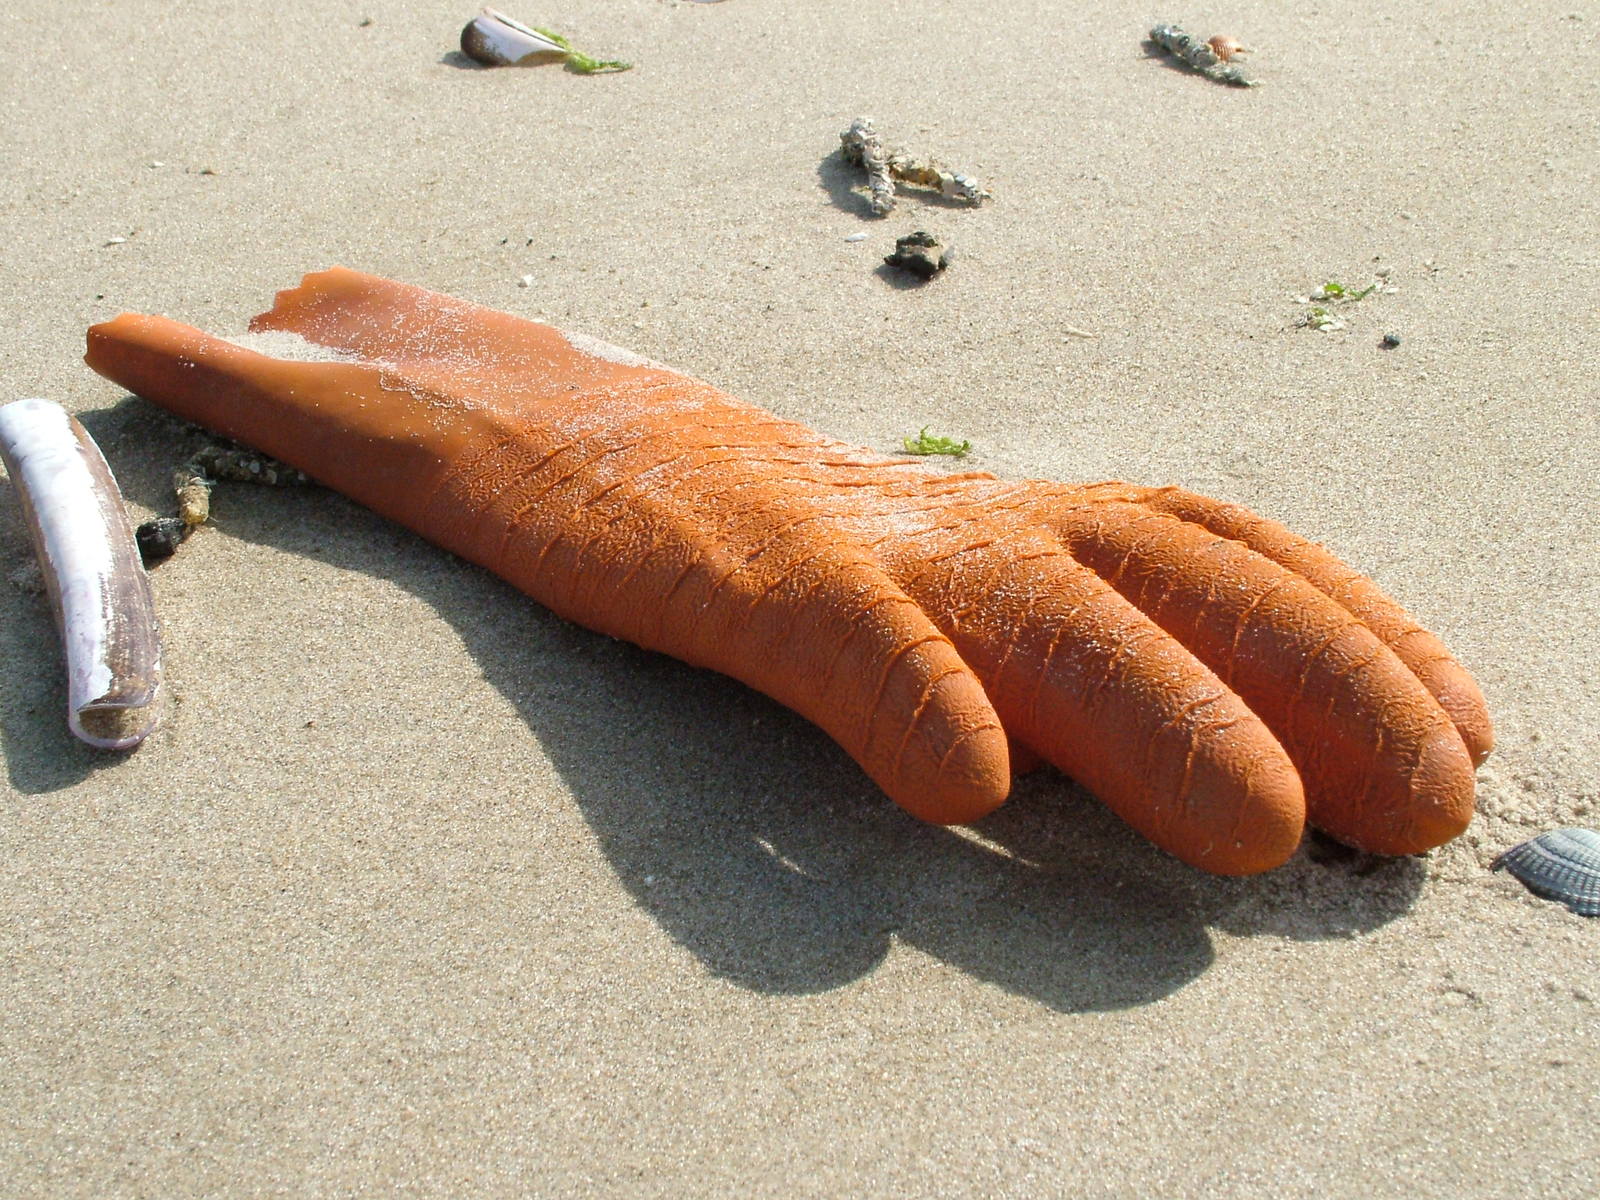 an odd carrot lying on the sand